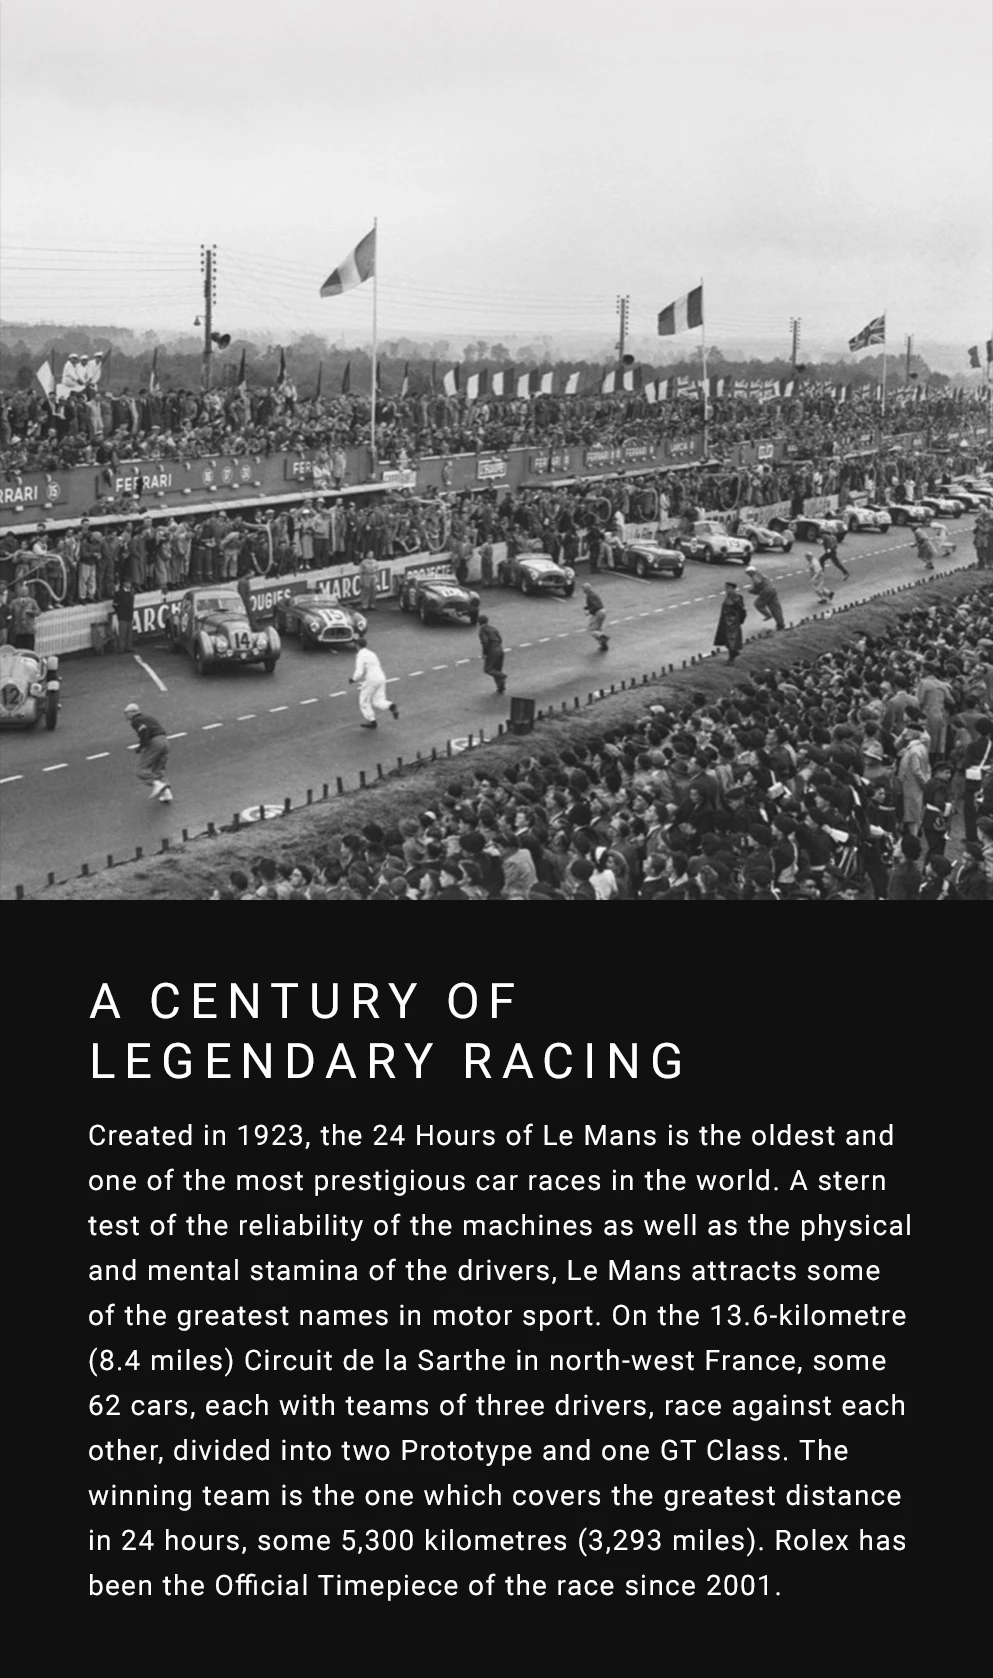 A century of legendary racing